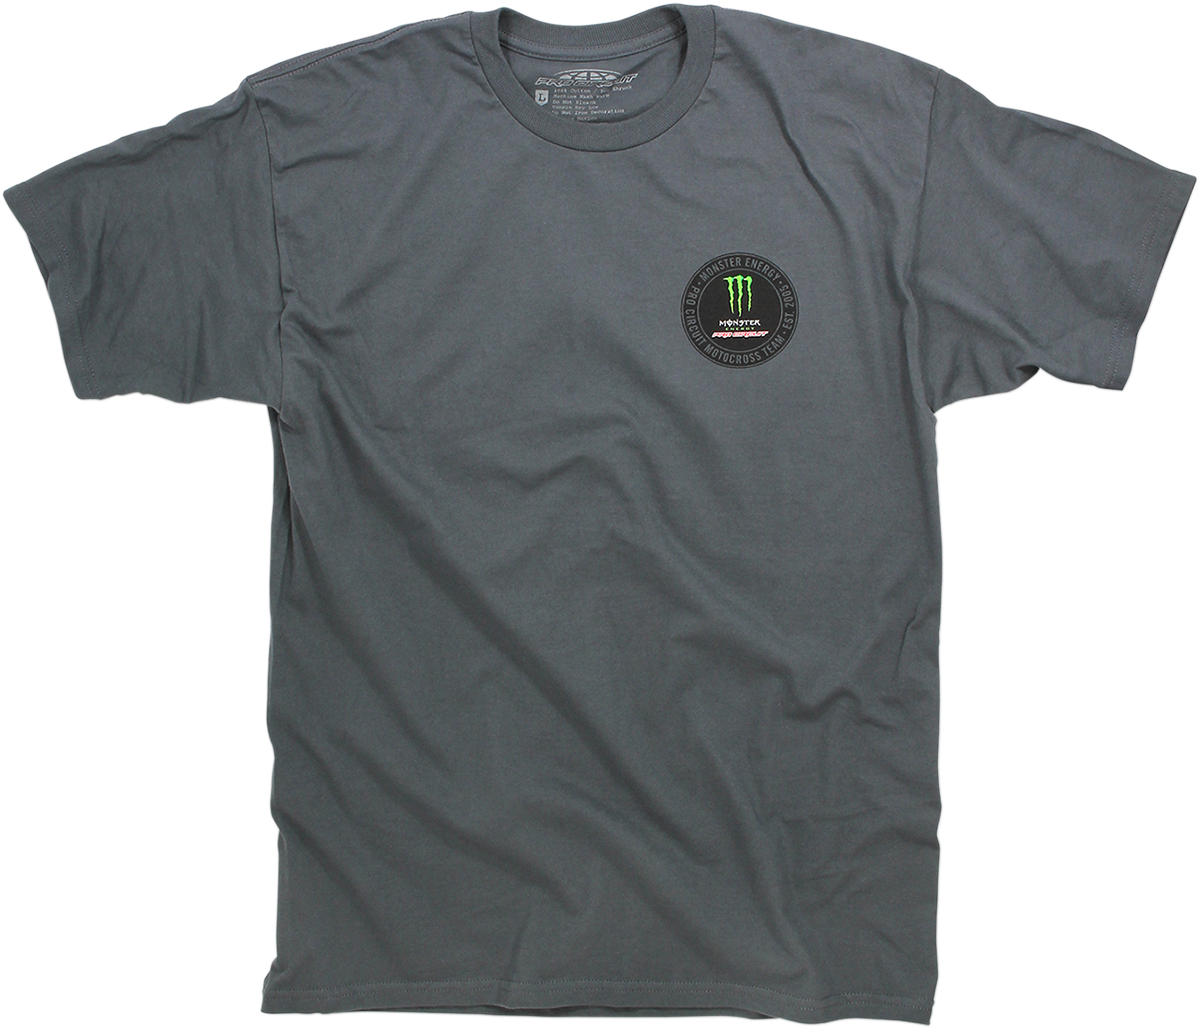 PRO CIRCUIT Patch T-Shirt - Gray - XL 6411560-040